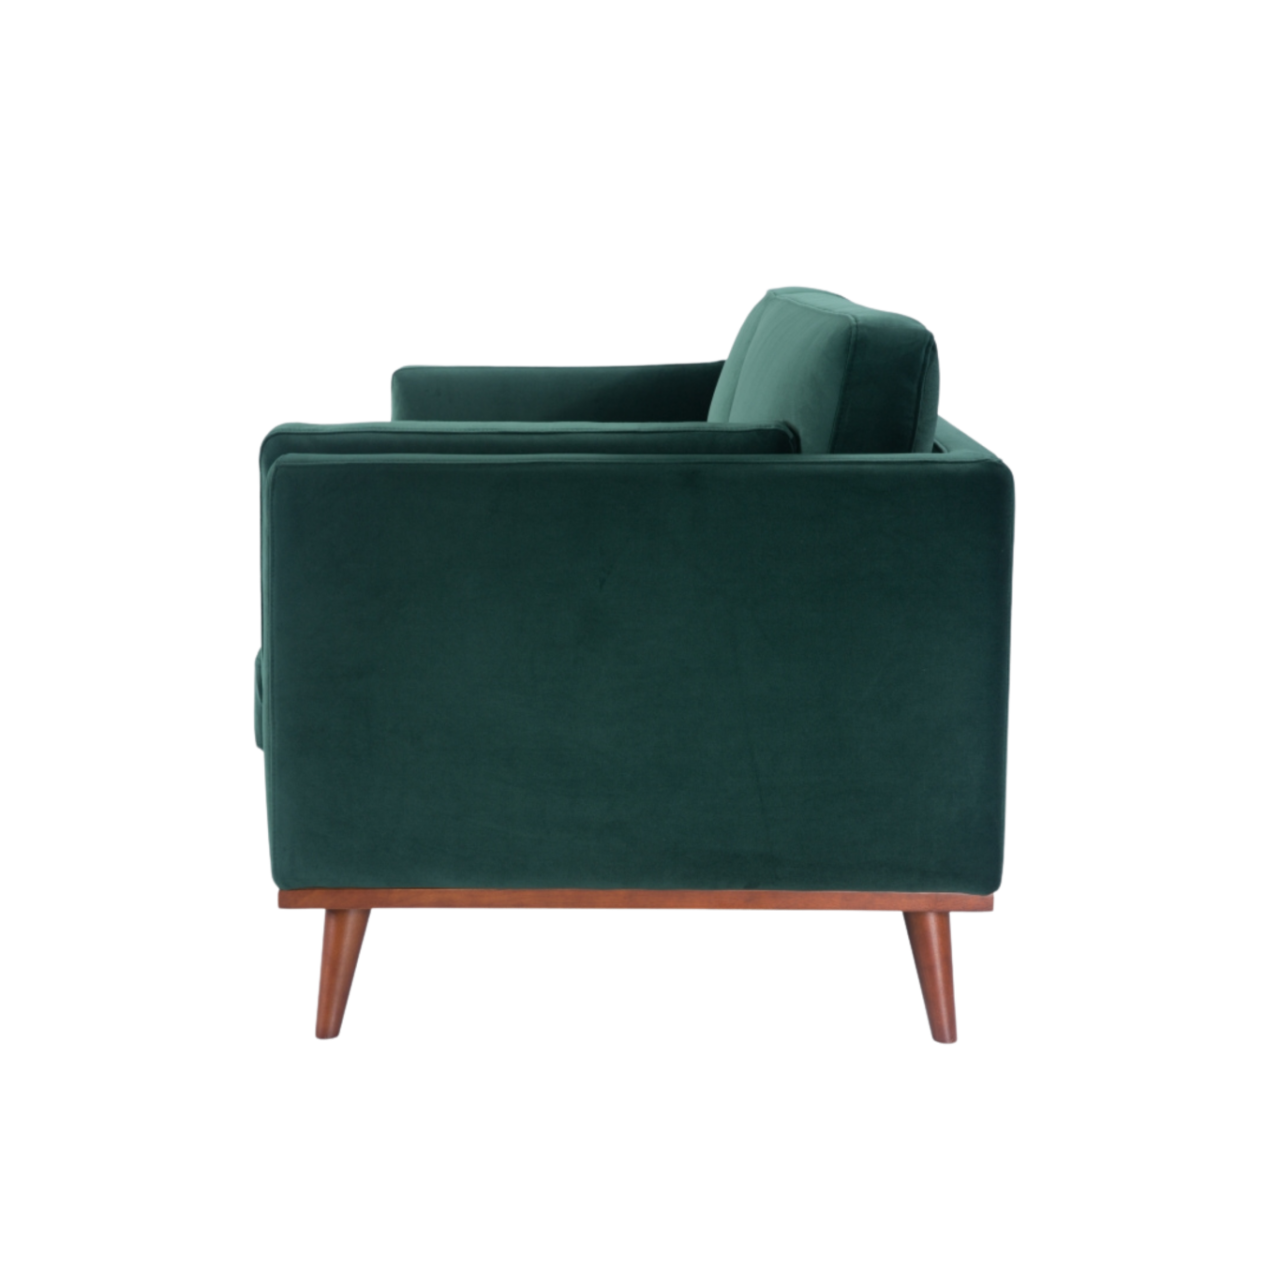 side view of simple modern 3 seater sofa in emerald green velvet